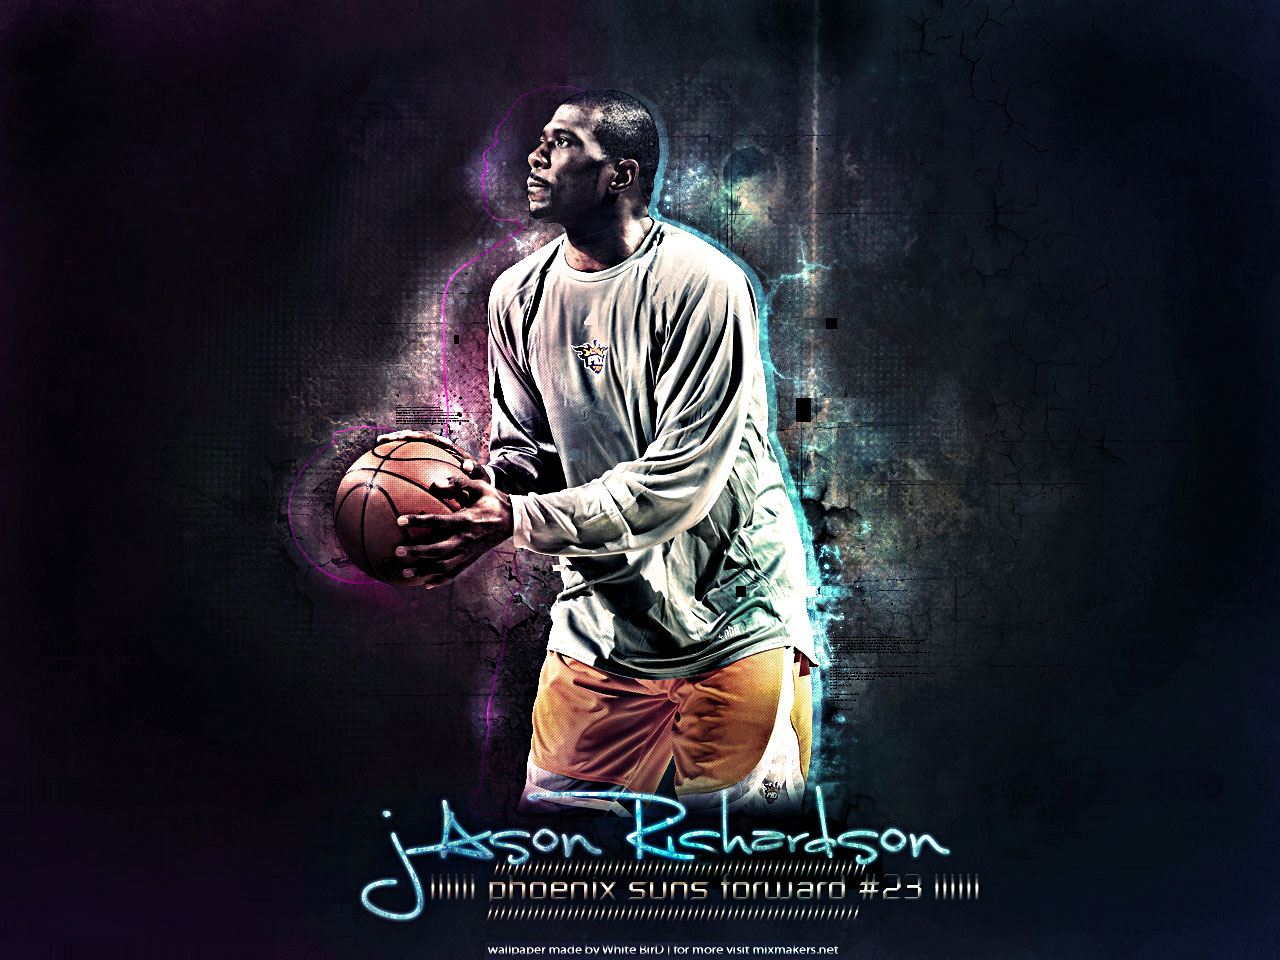 Jason Richardson Suns